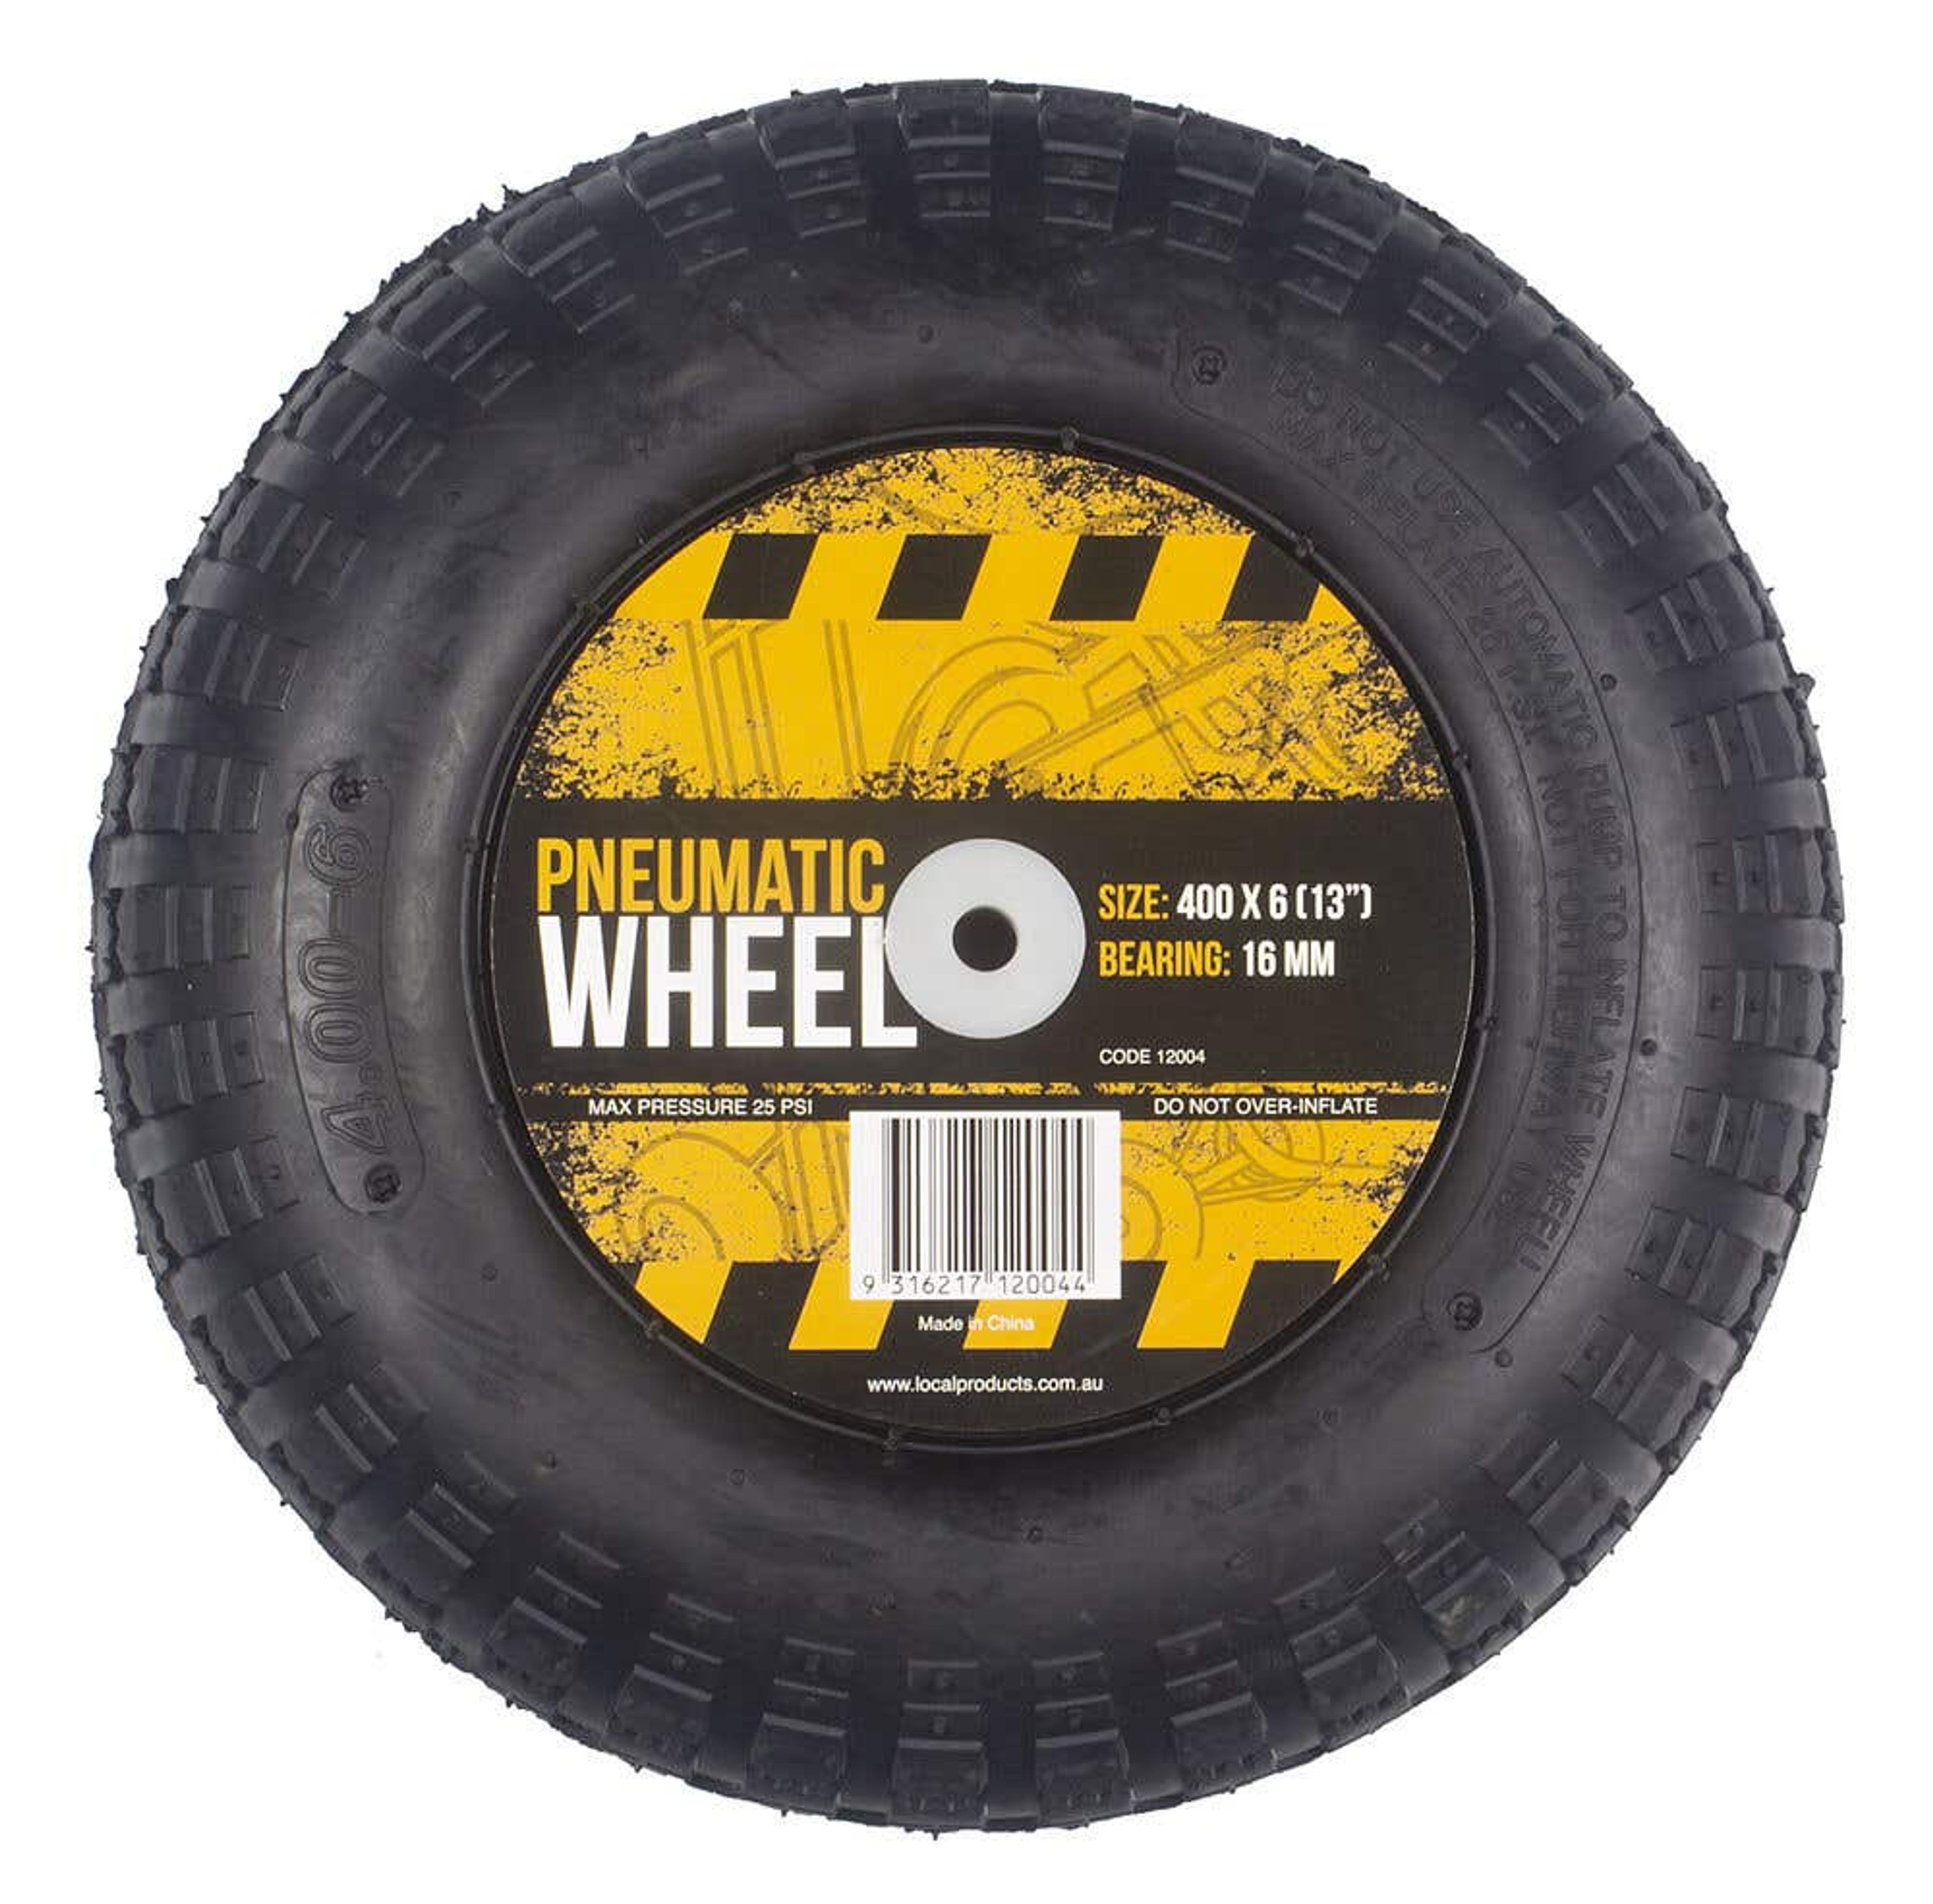 Wheelbarrow Tyres & Replacement Parts